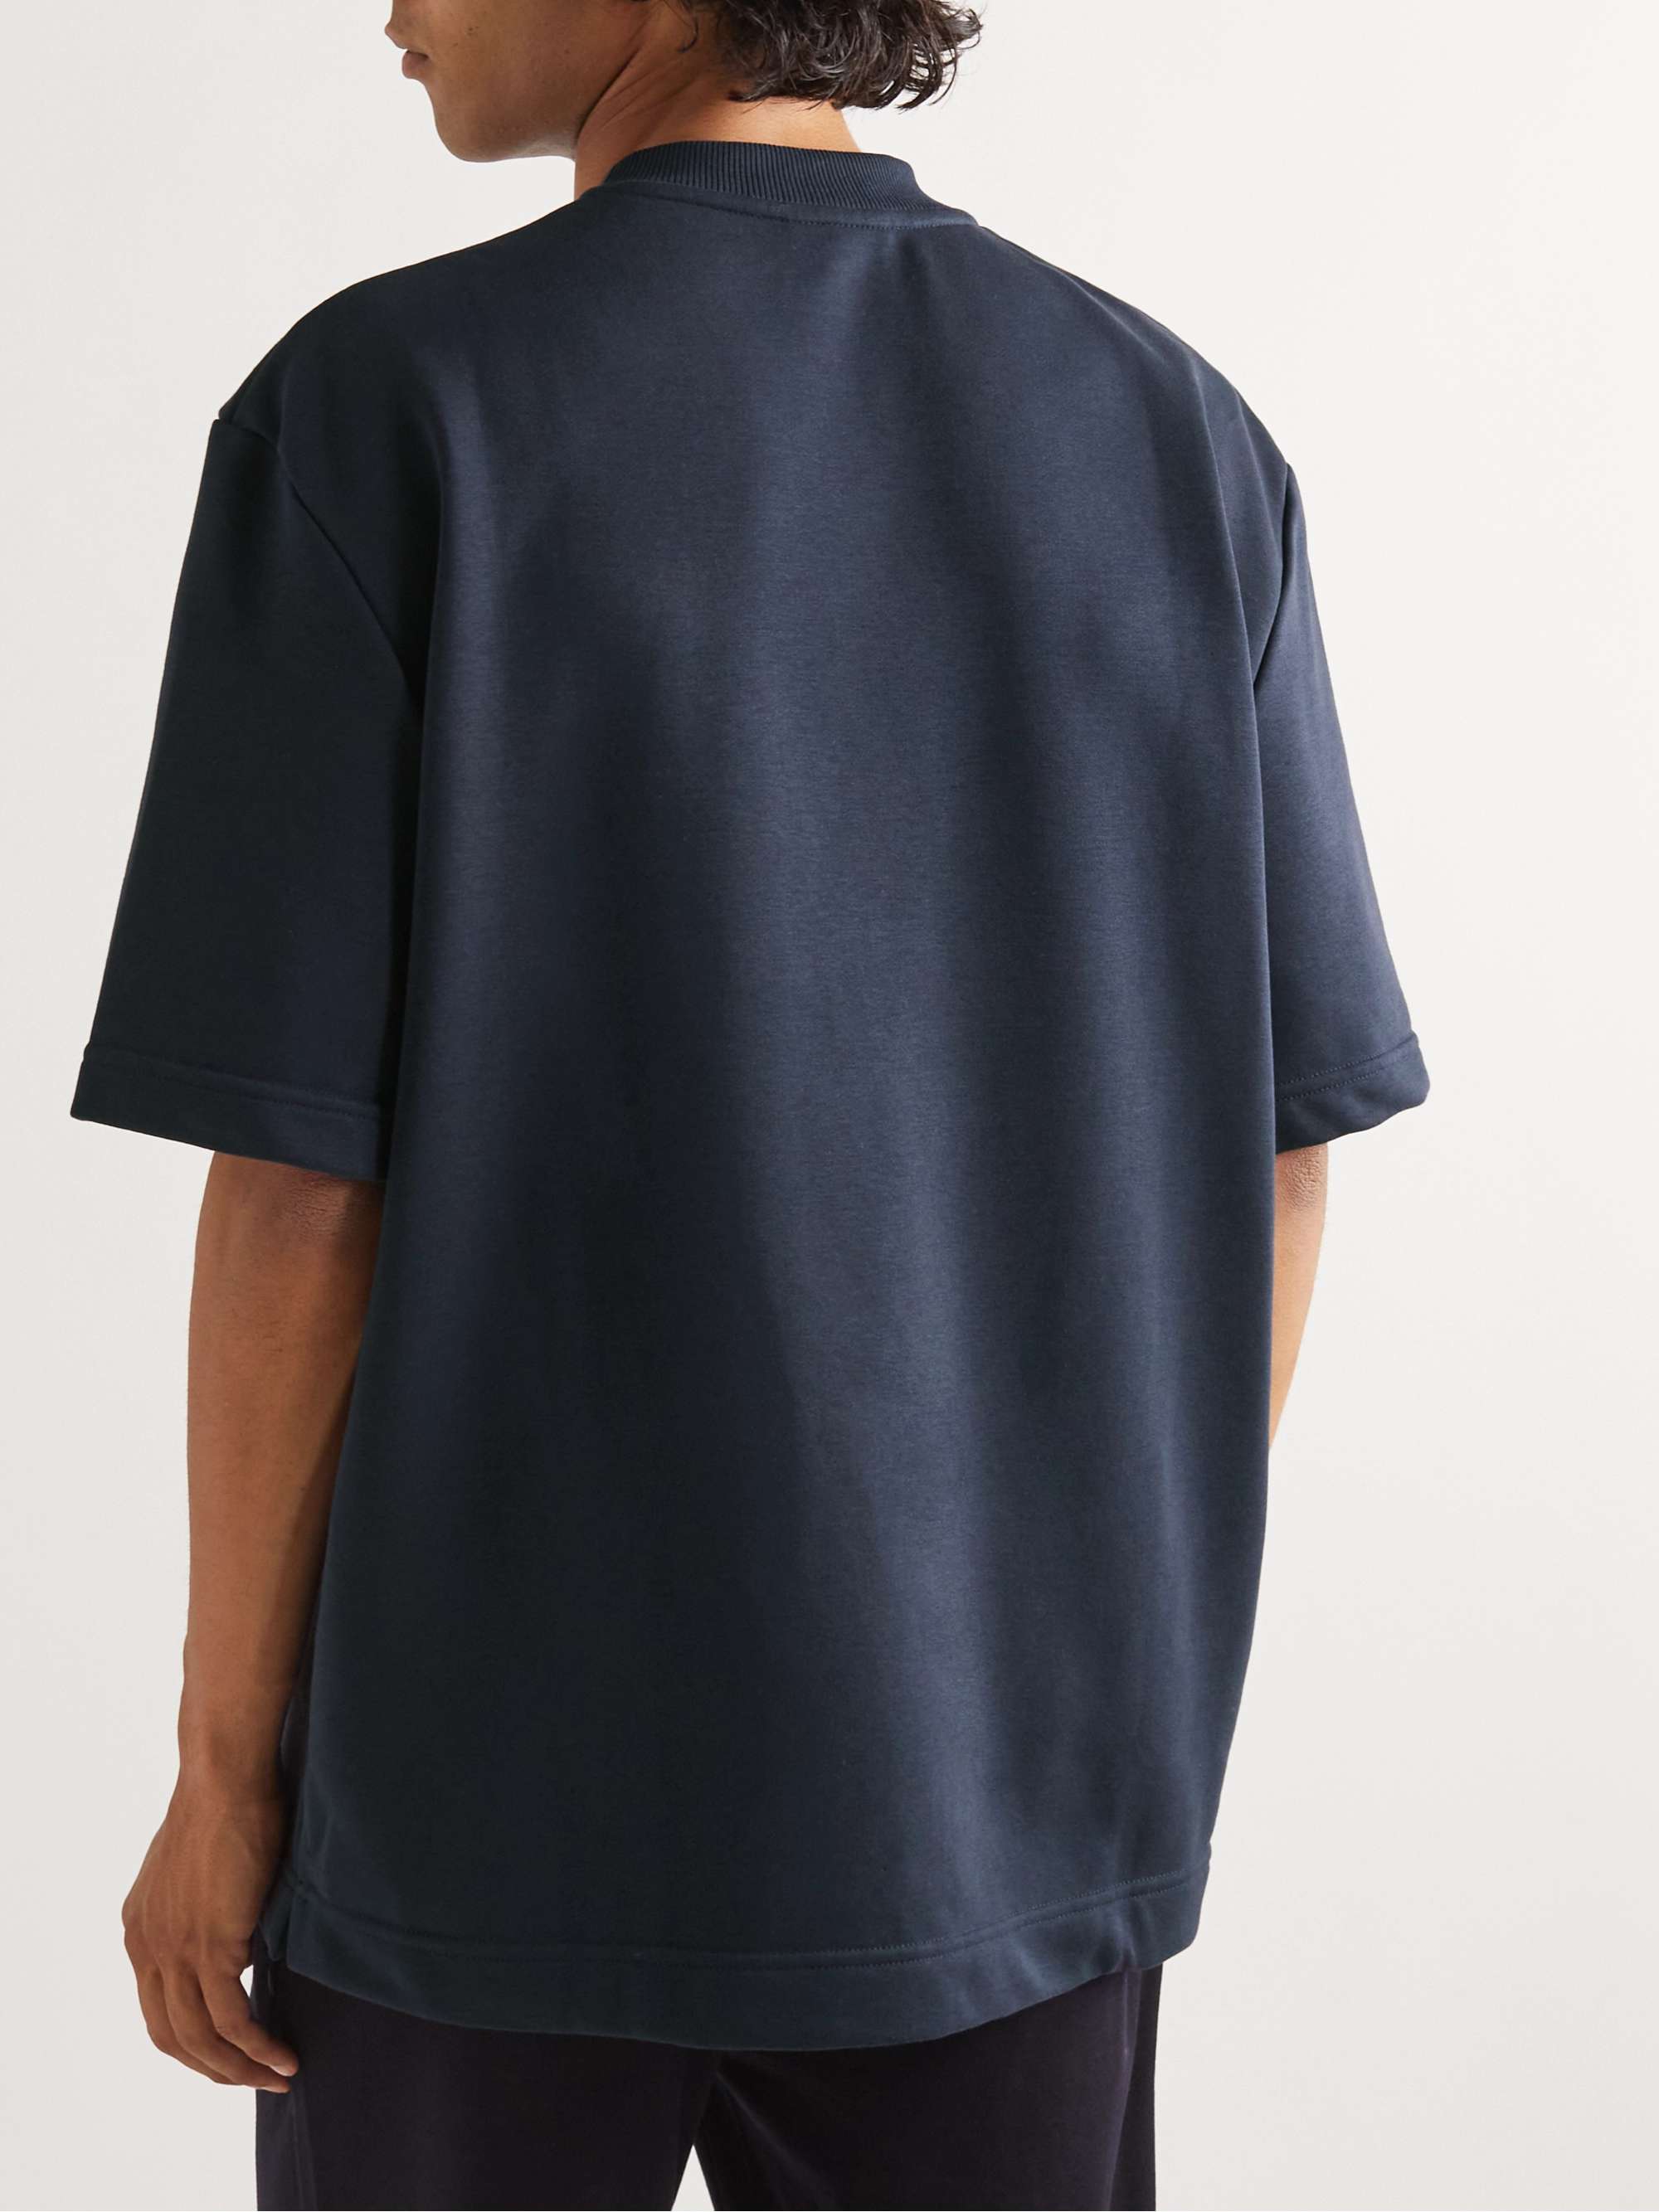 ERMENEGILDO ZEGNA Logo-Embroidered Cotton-Blend Jersey T-Shirt